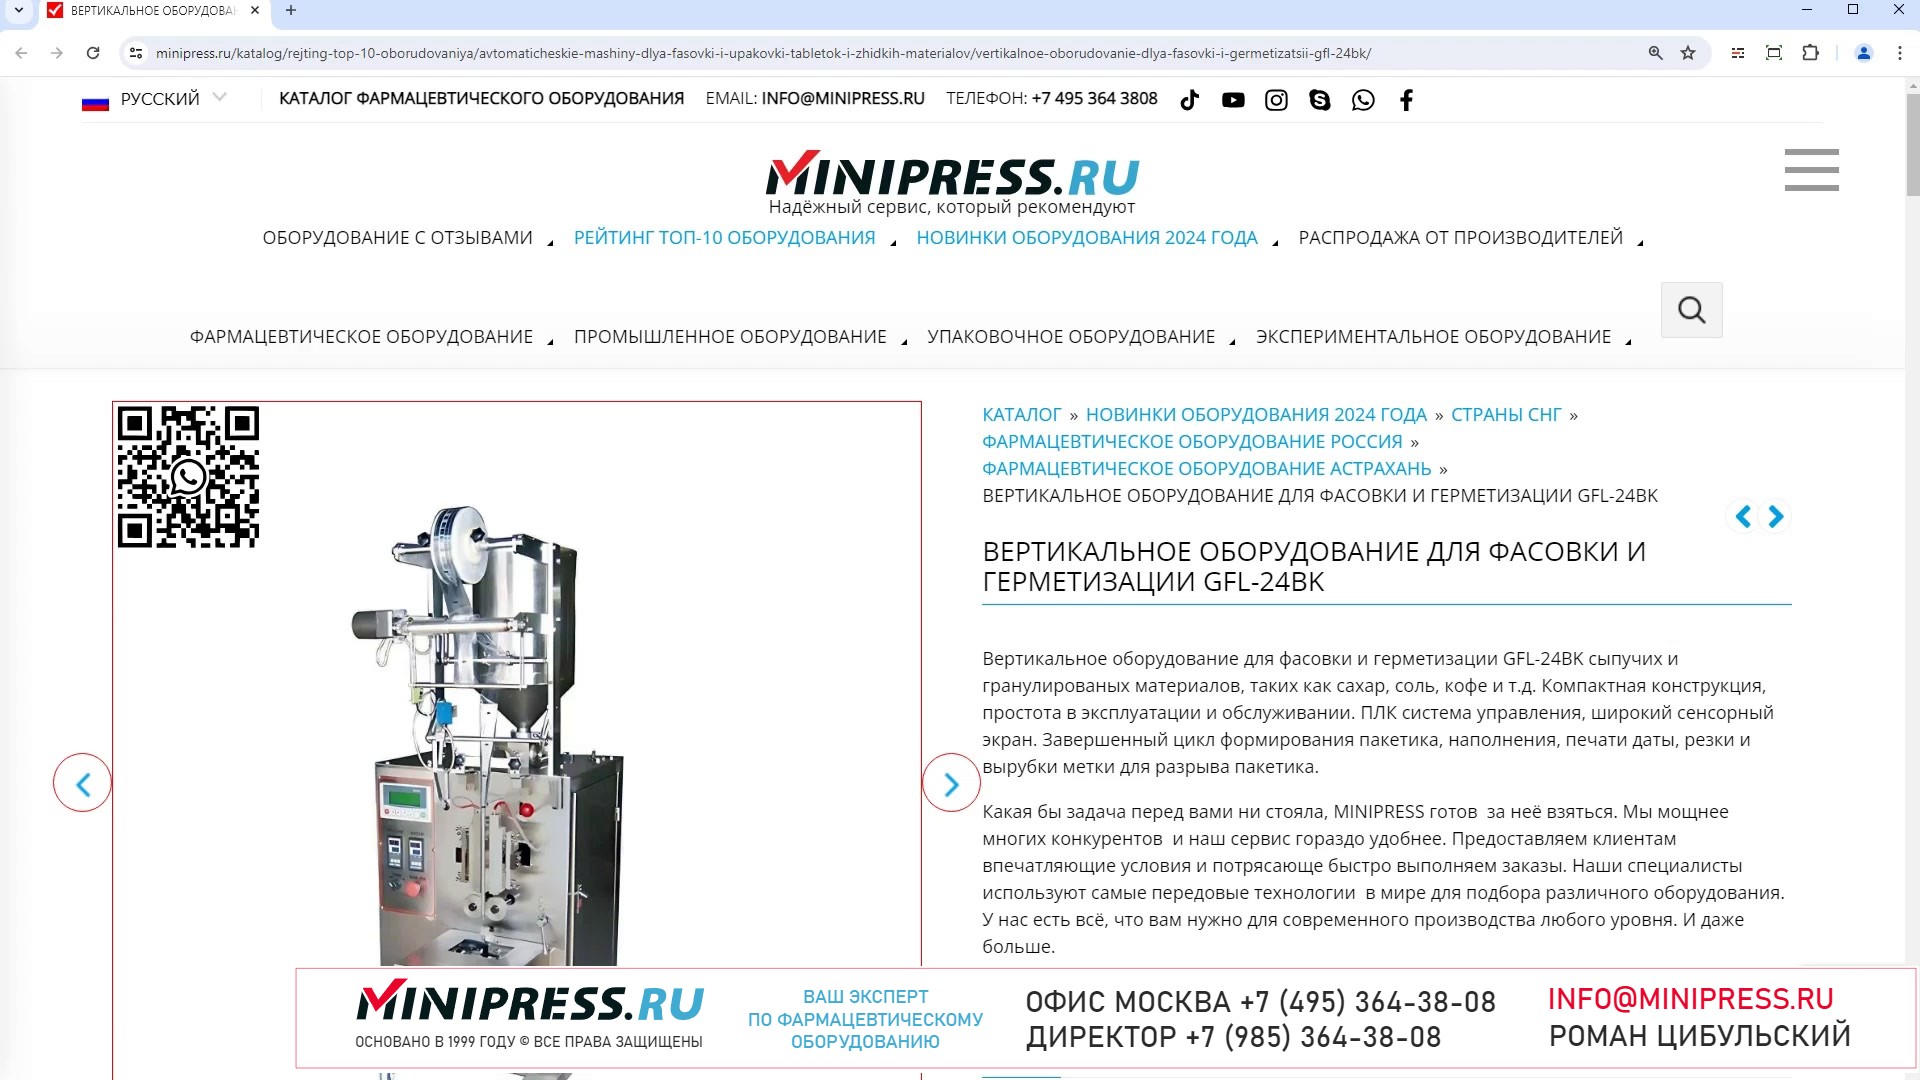 Minipress.ru Вертикальное оборудование для фасовки и герметизации GFL-24BK